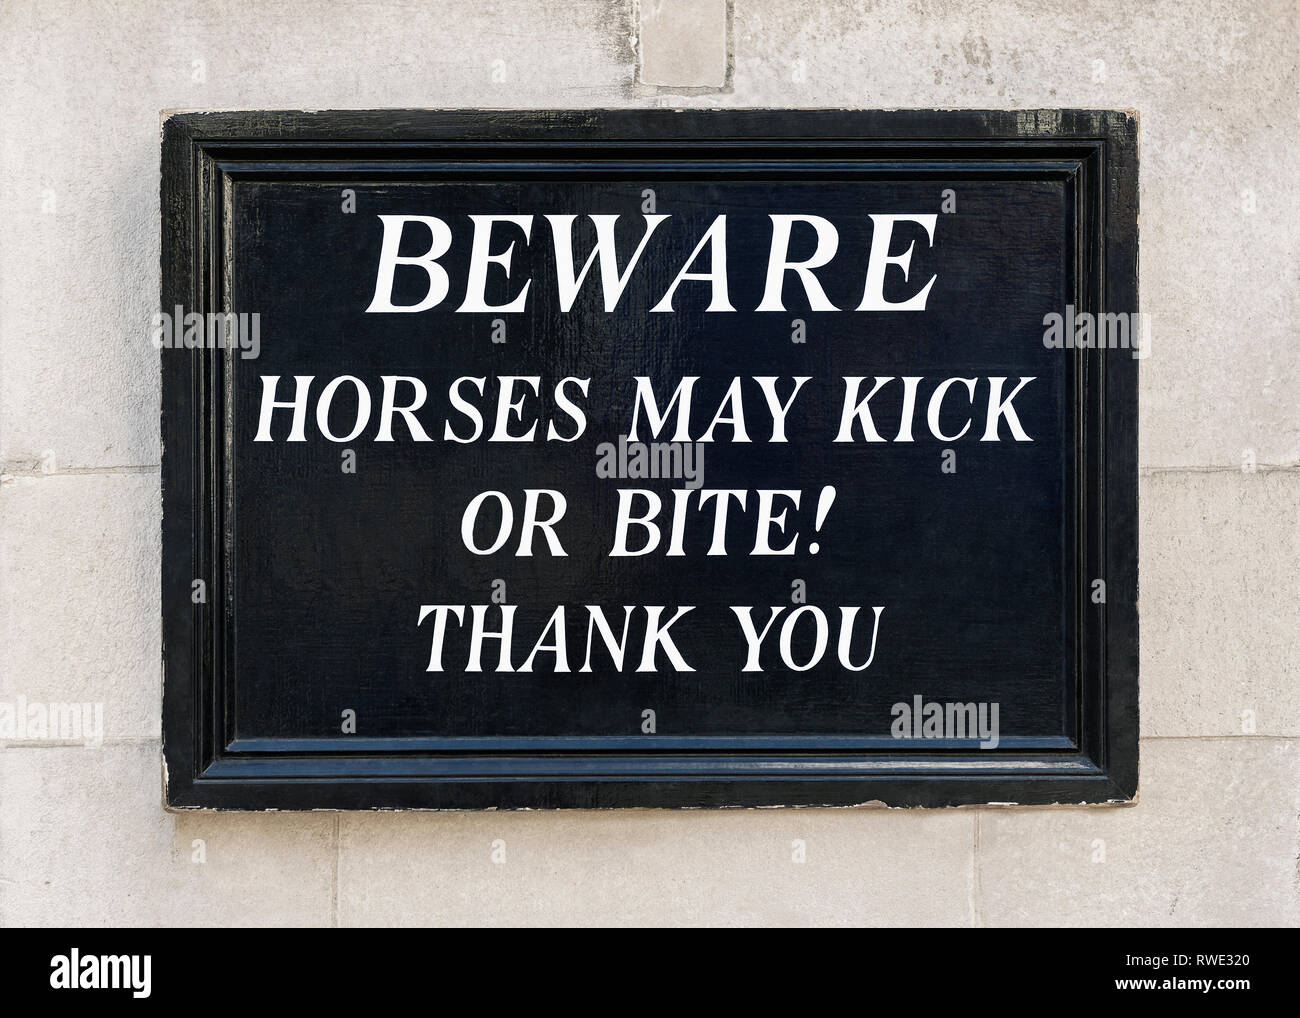 Ten cuidado con los caballos pueden patear o morder signo, Edificio de guardias a caballo, London, England, Reino Unido Foto de stock